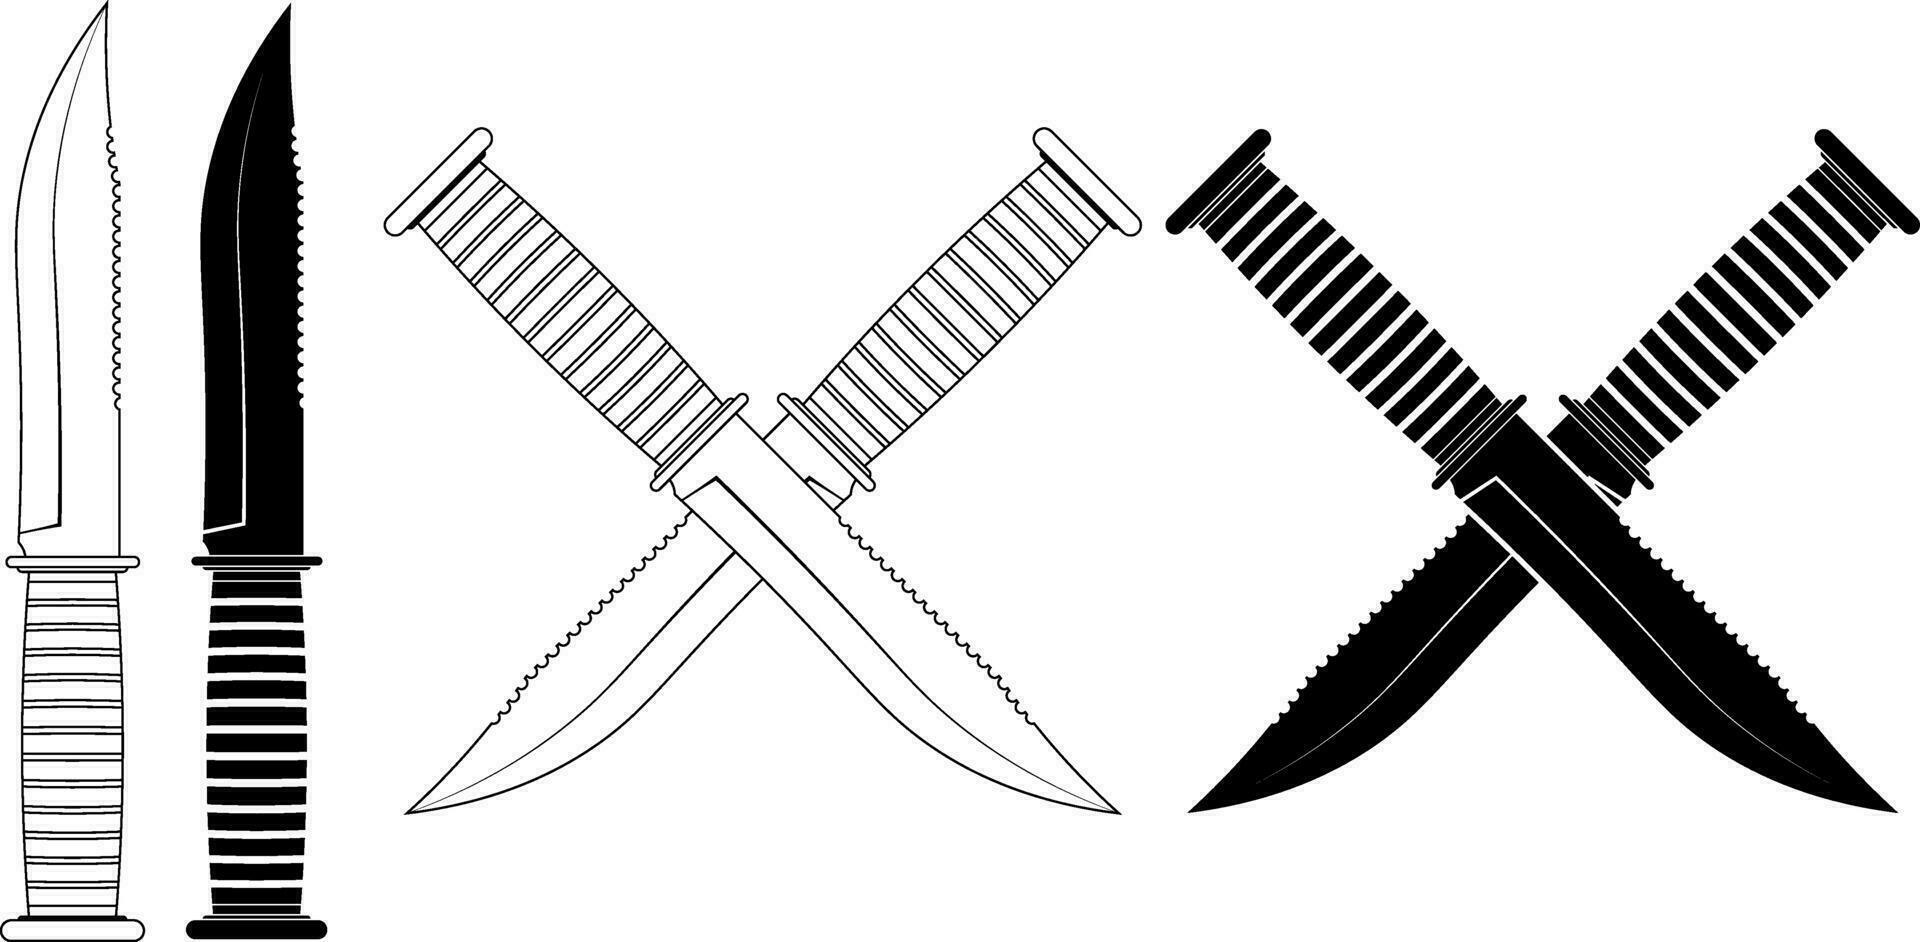 gekreuzt Kampf Messer Symbol einstellen vektor